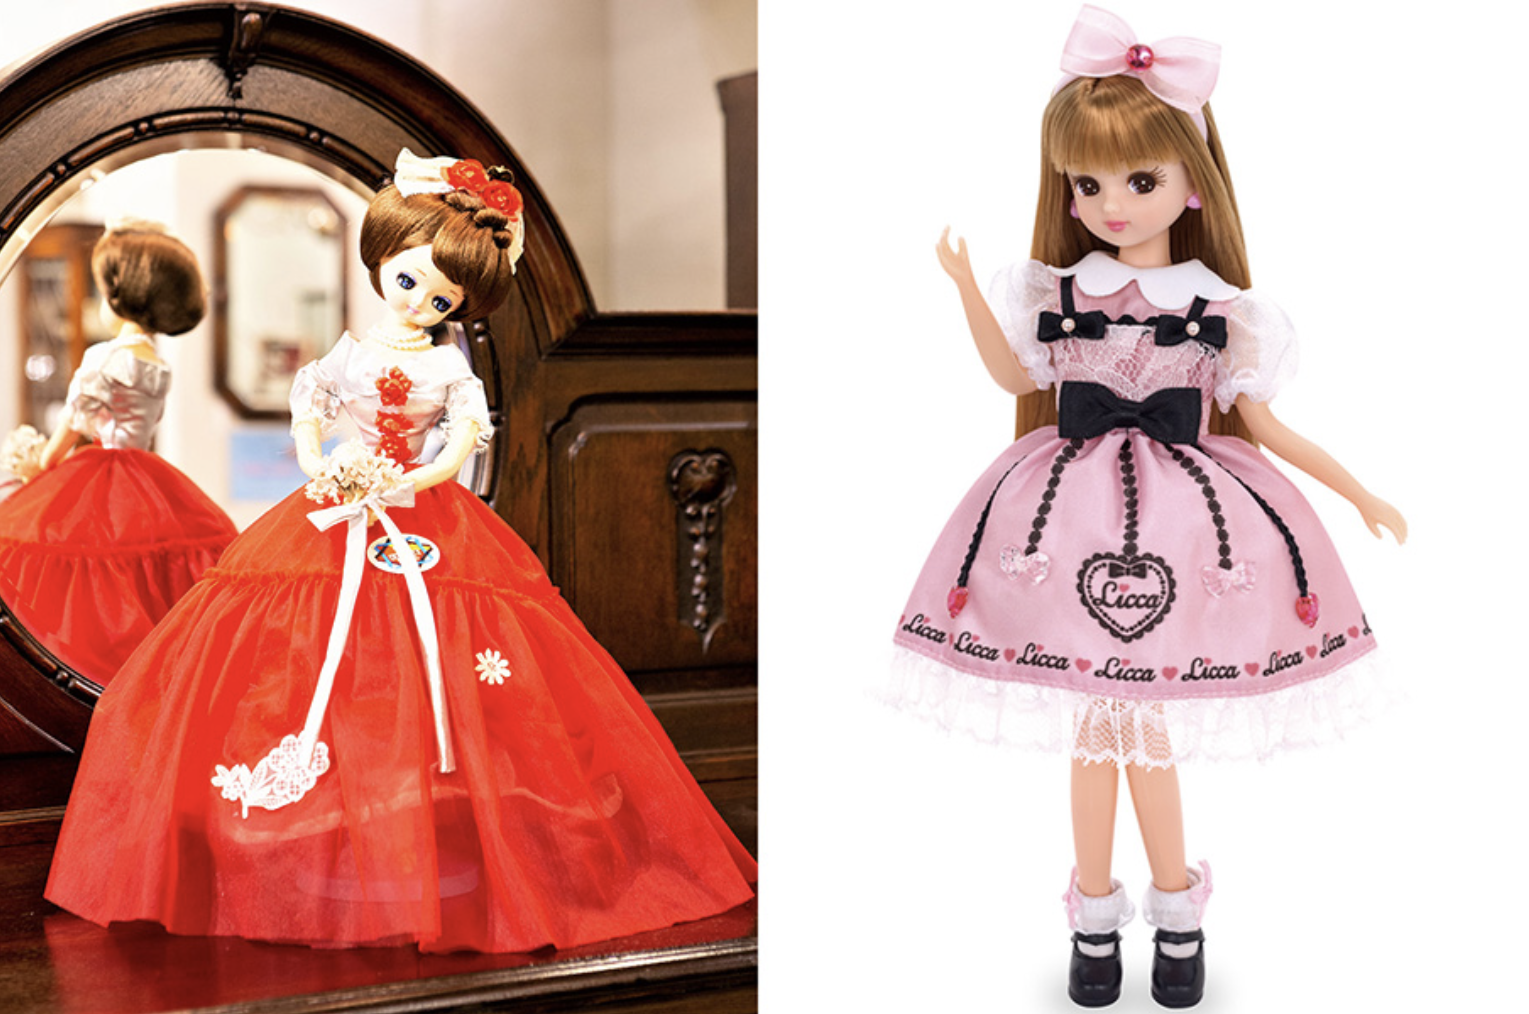 “Japanese Dolls: From Showa to Reiwa eras” 